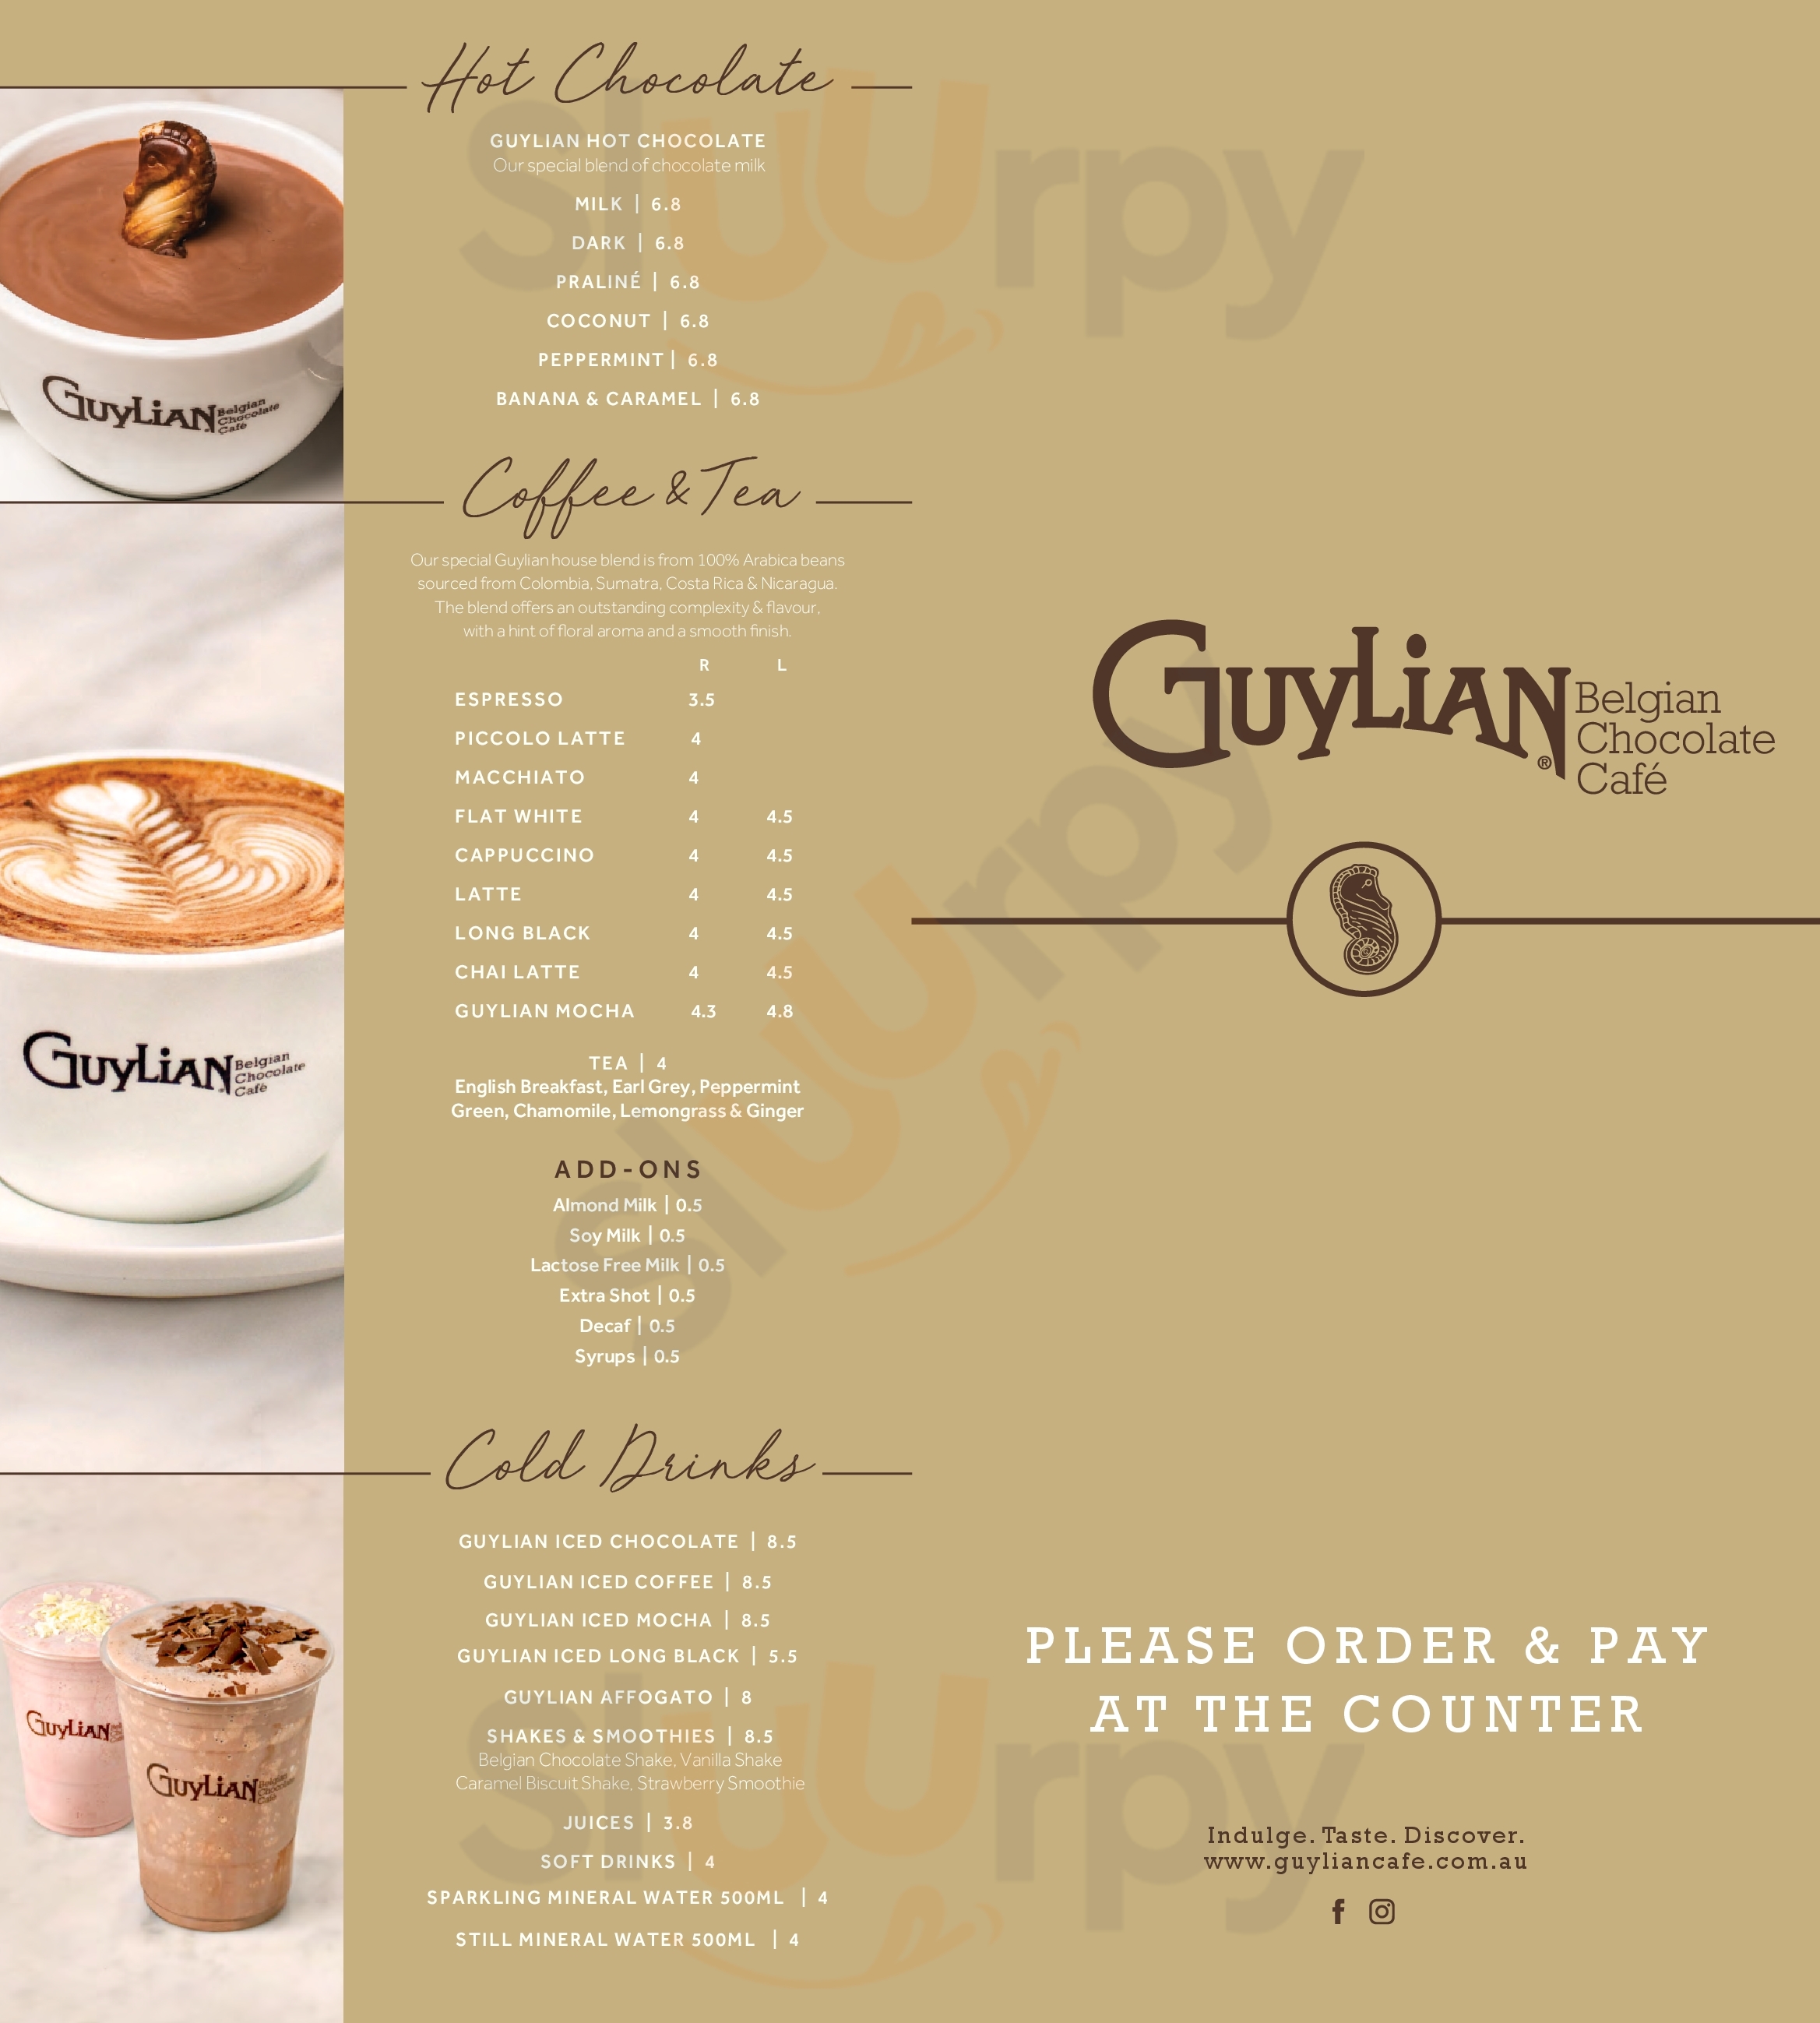 Guylian Belgian Chocolate Cafe Parramatta Menu - 1